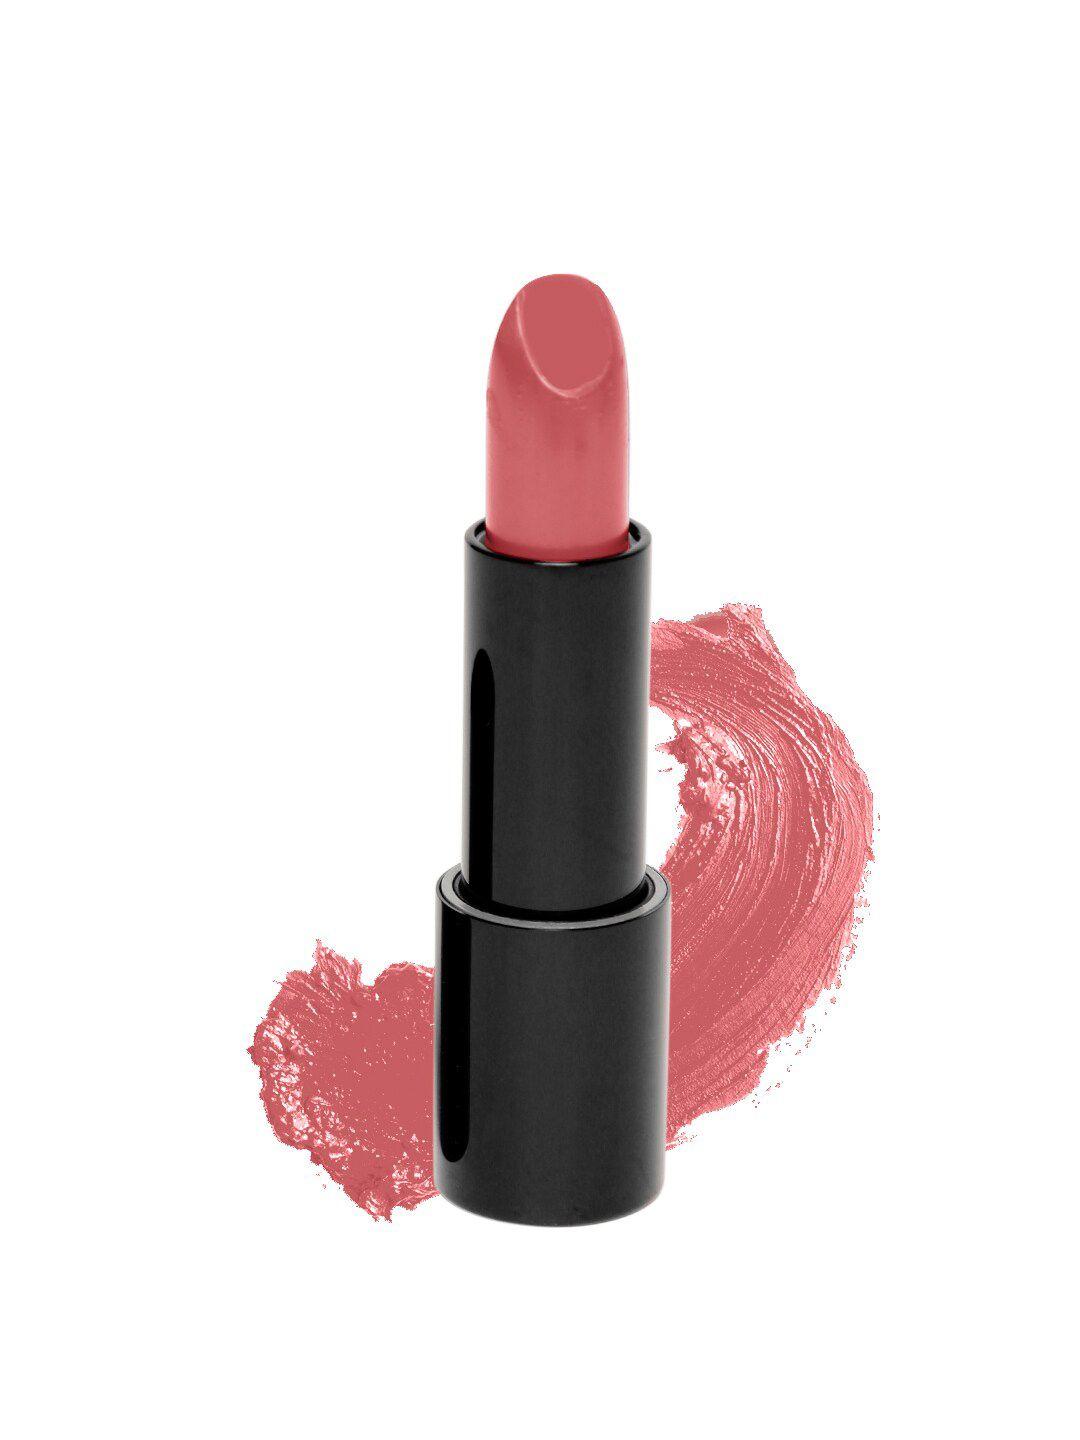 paese cosmetics lipstick with argan oil 4.3 g - 54